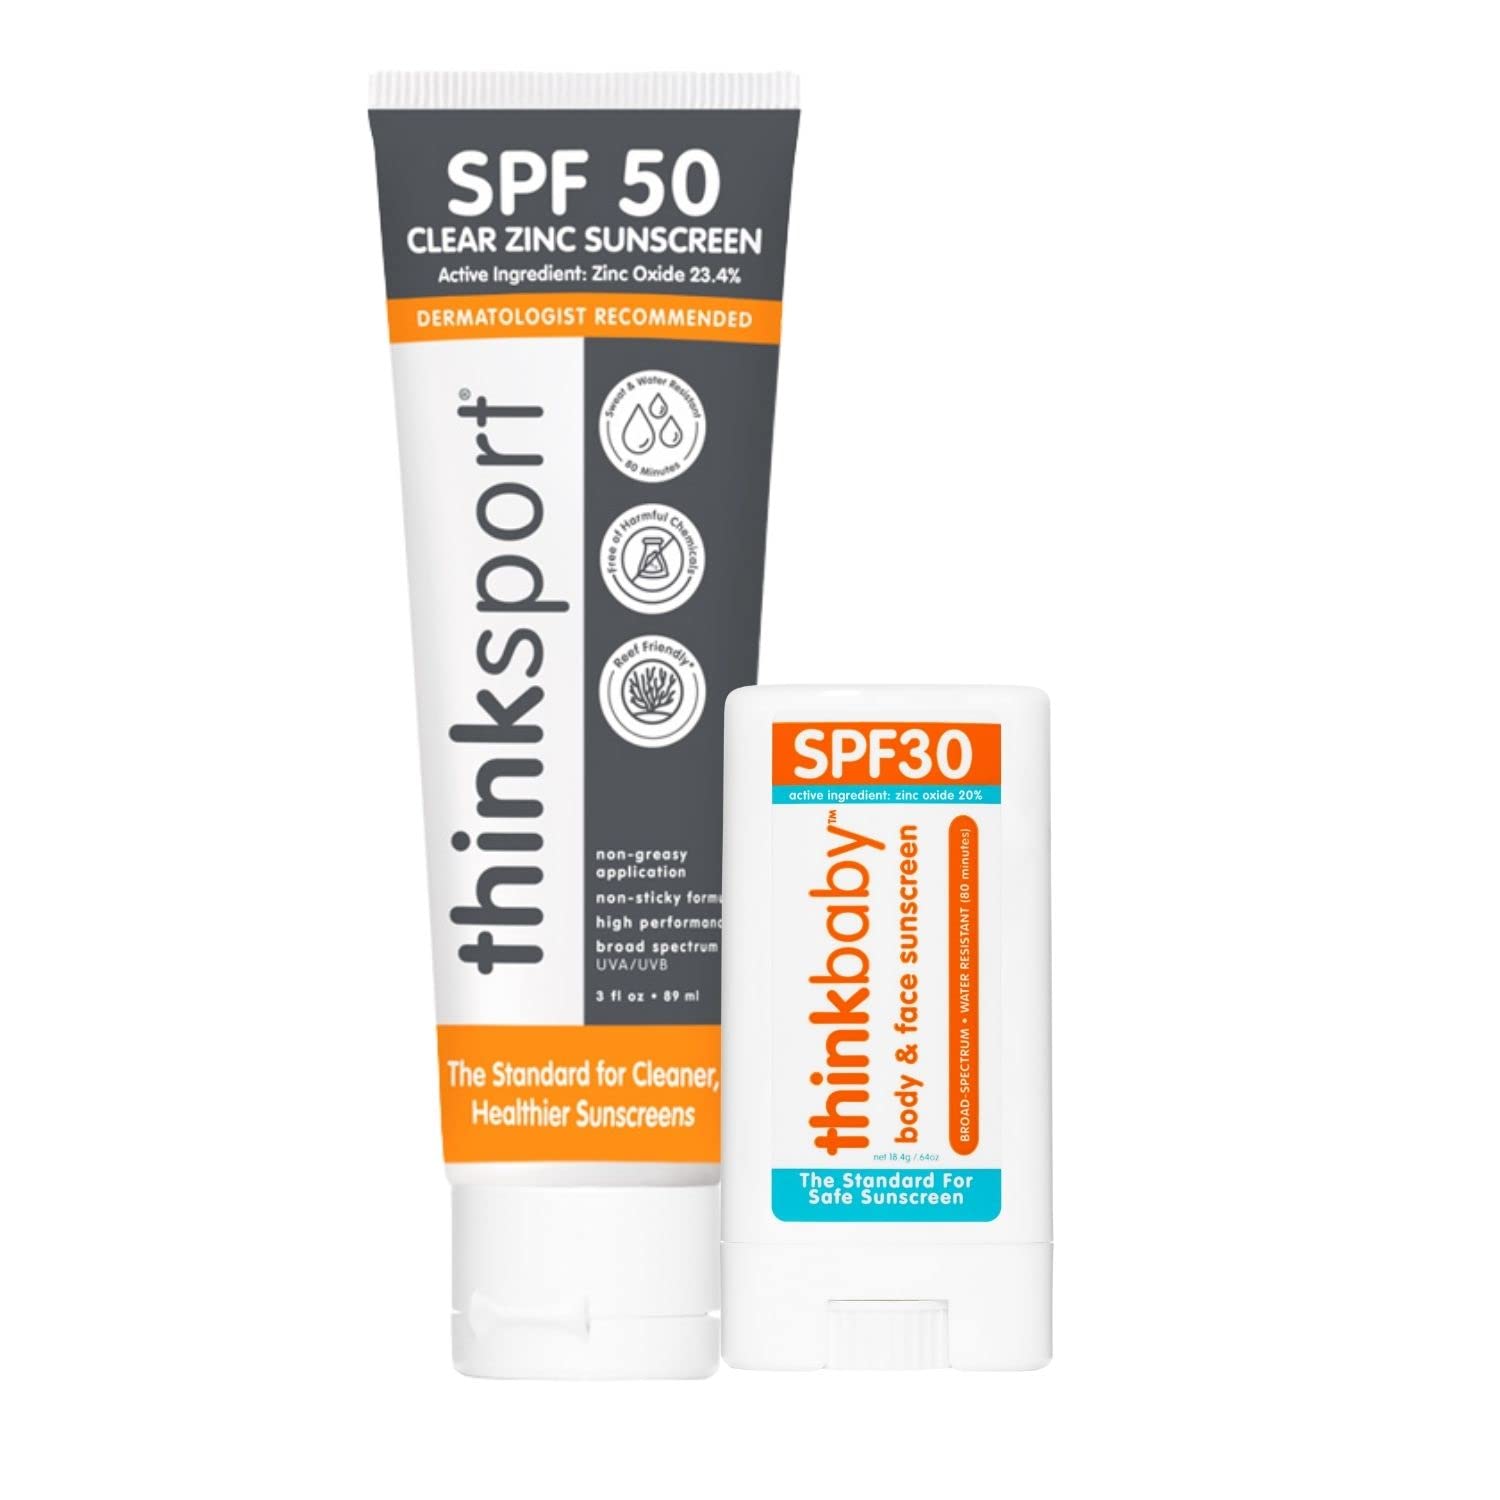 Thinksport SPF 50 Clear Zinc Sunscreen 3 Oz + Thinkbaby SPF 30 Sunscreen Stick 0.64oz